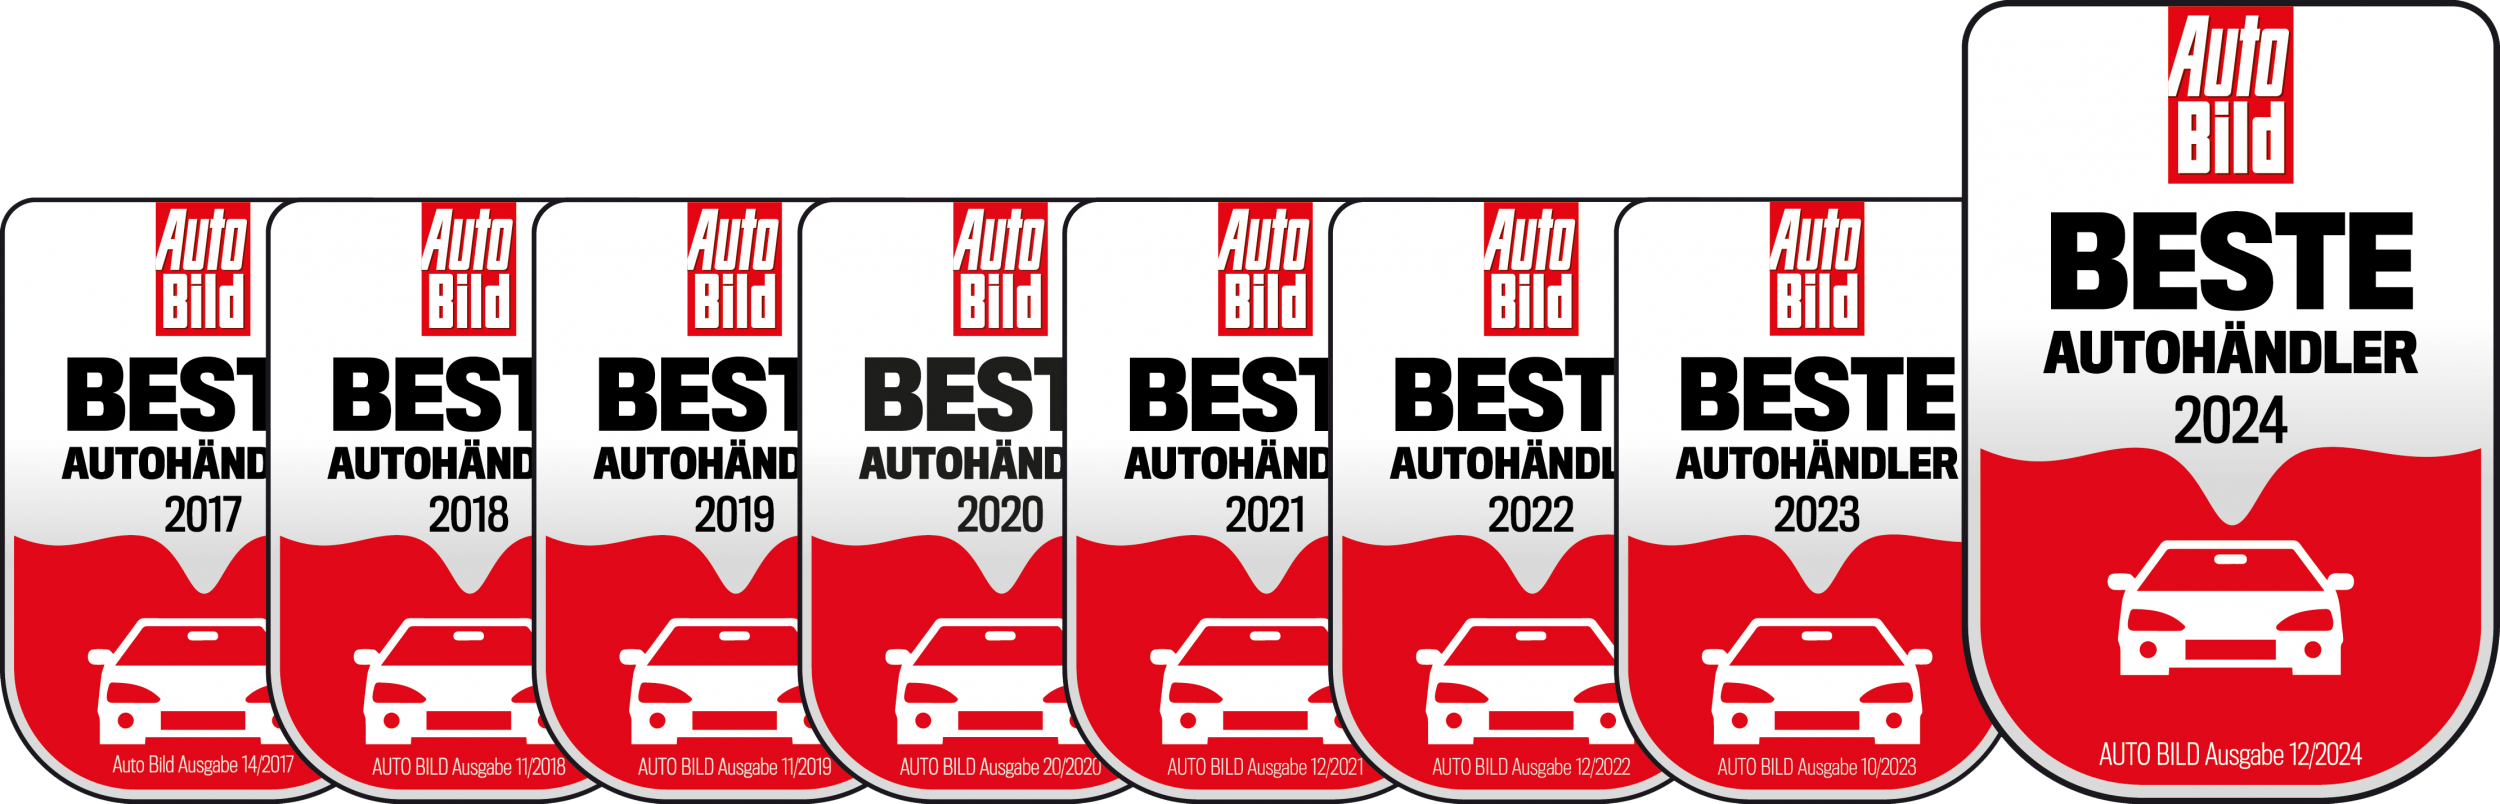 Auto Niedermayer - Beste Autohändler 2024